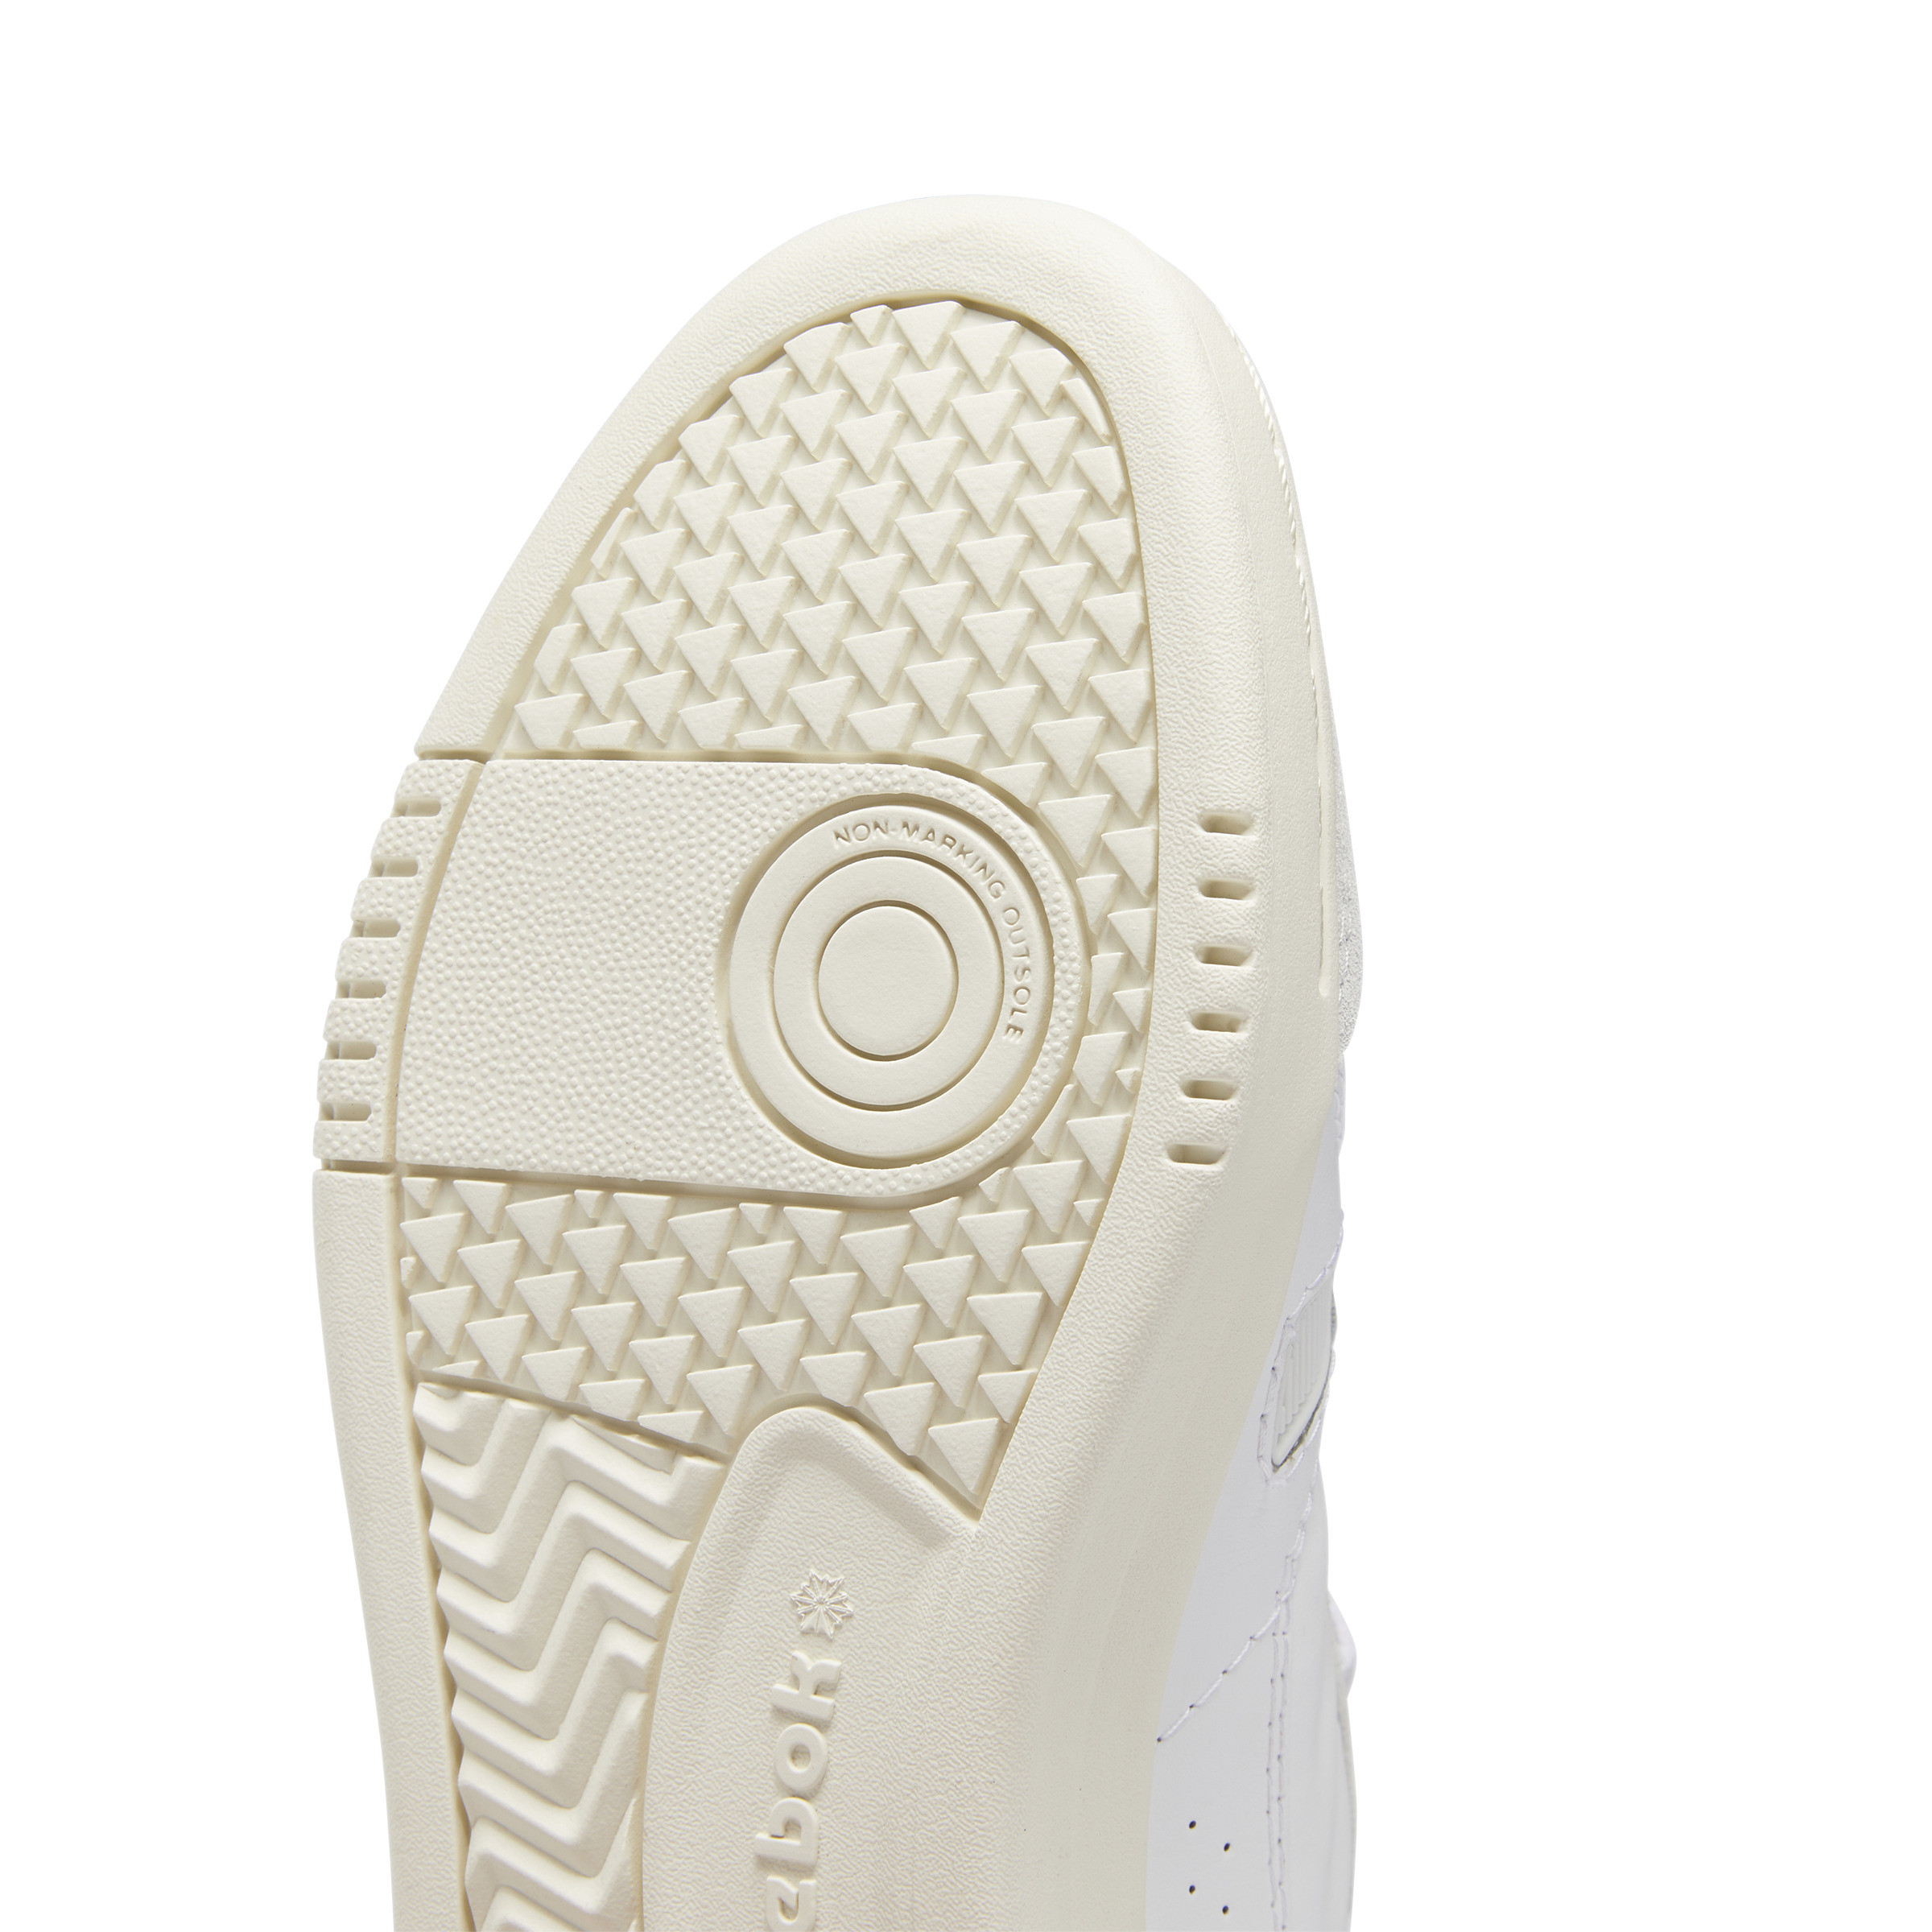 Reebok - LT Court shoes, White, large image number 9